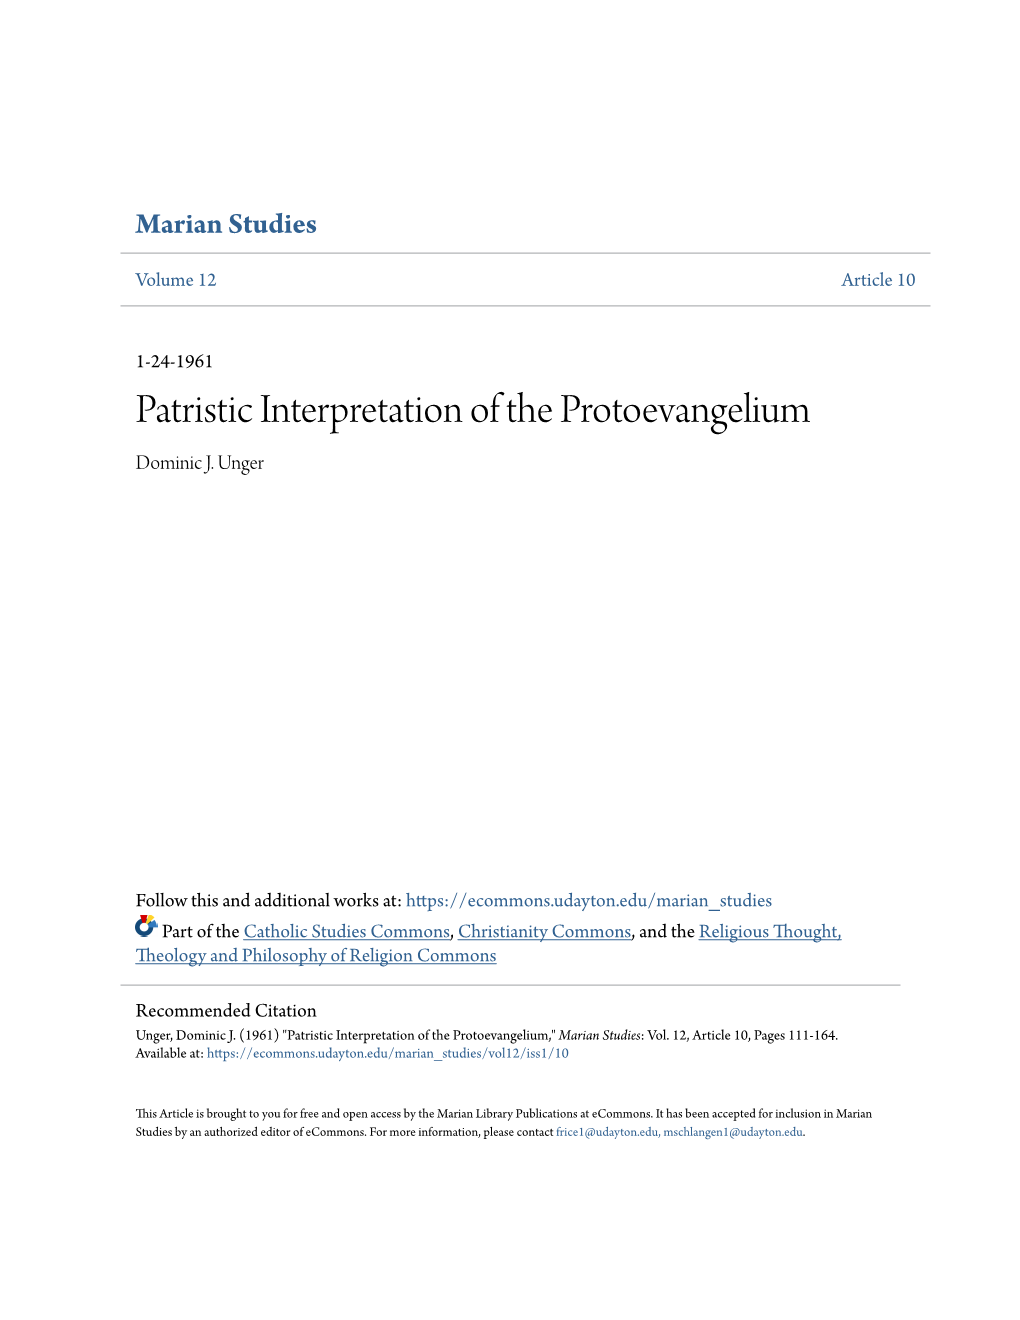 Patristic Interpretation of the Protoevangelium Dominic J